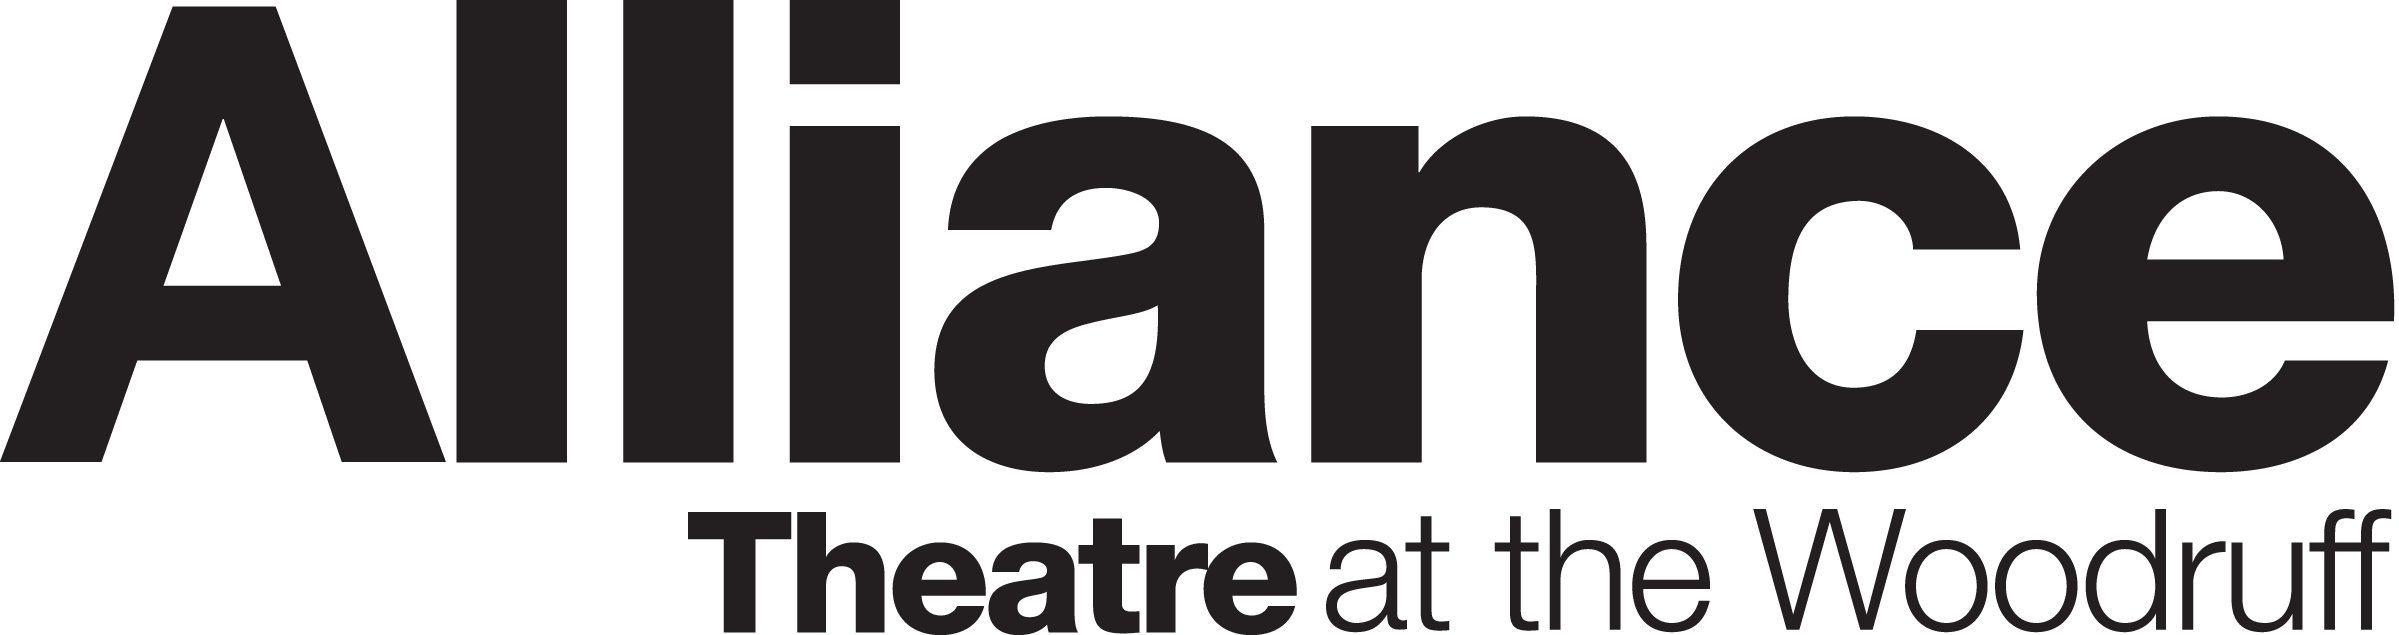 alliance theatre logo_b_newa.png